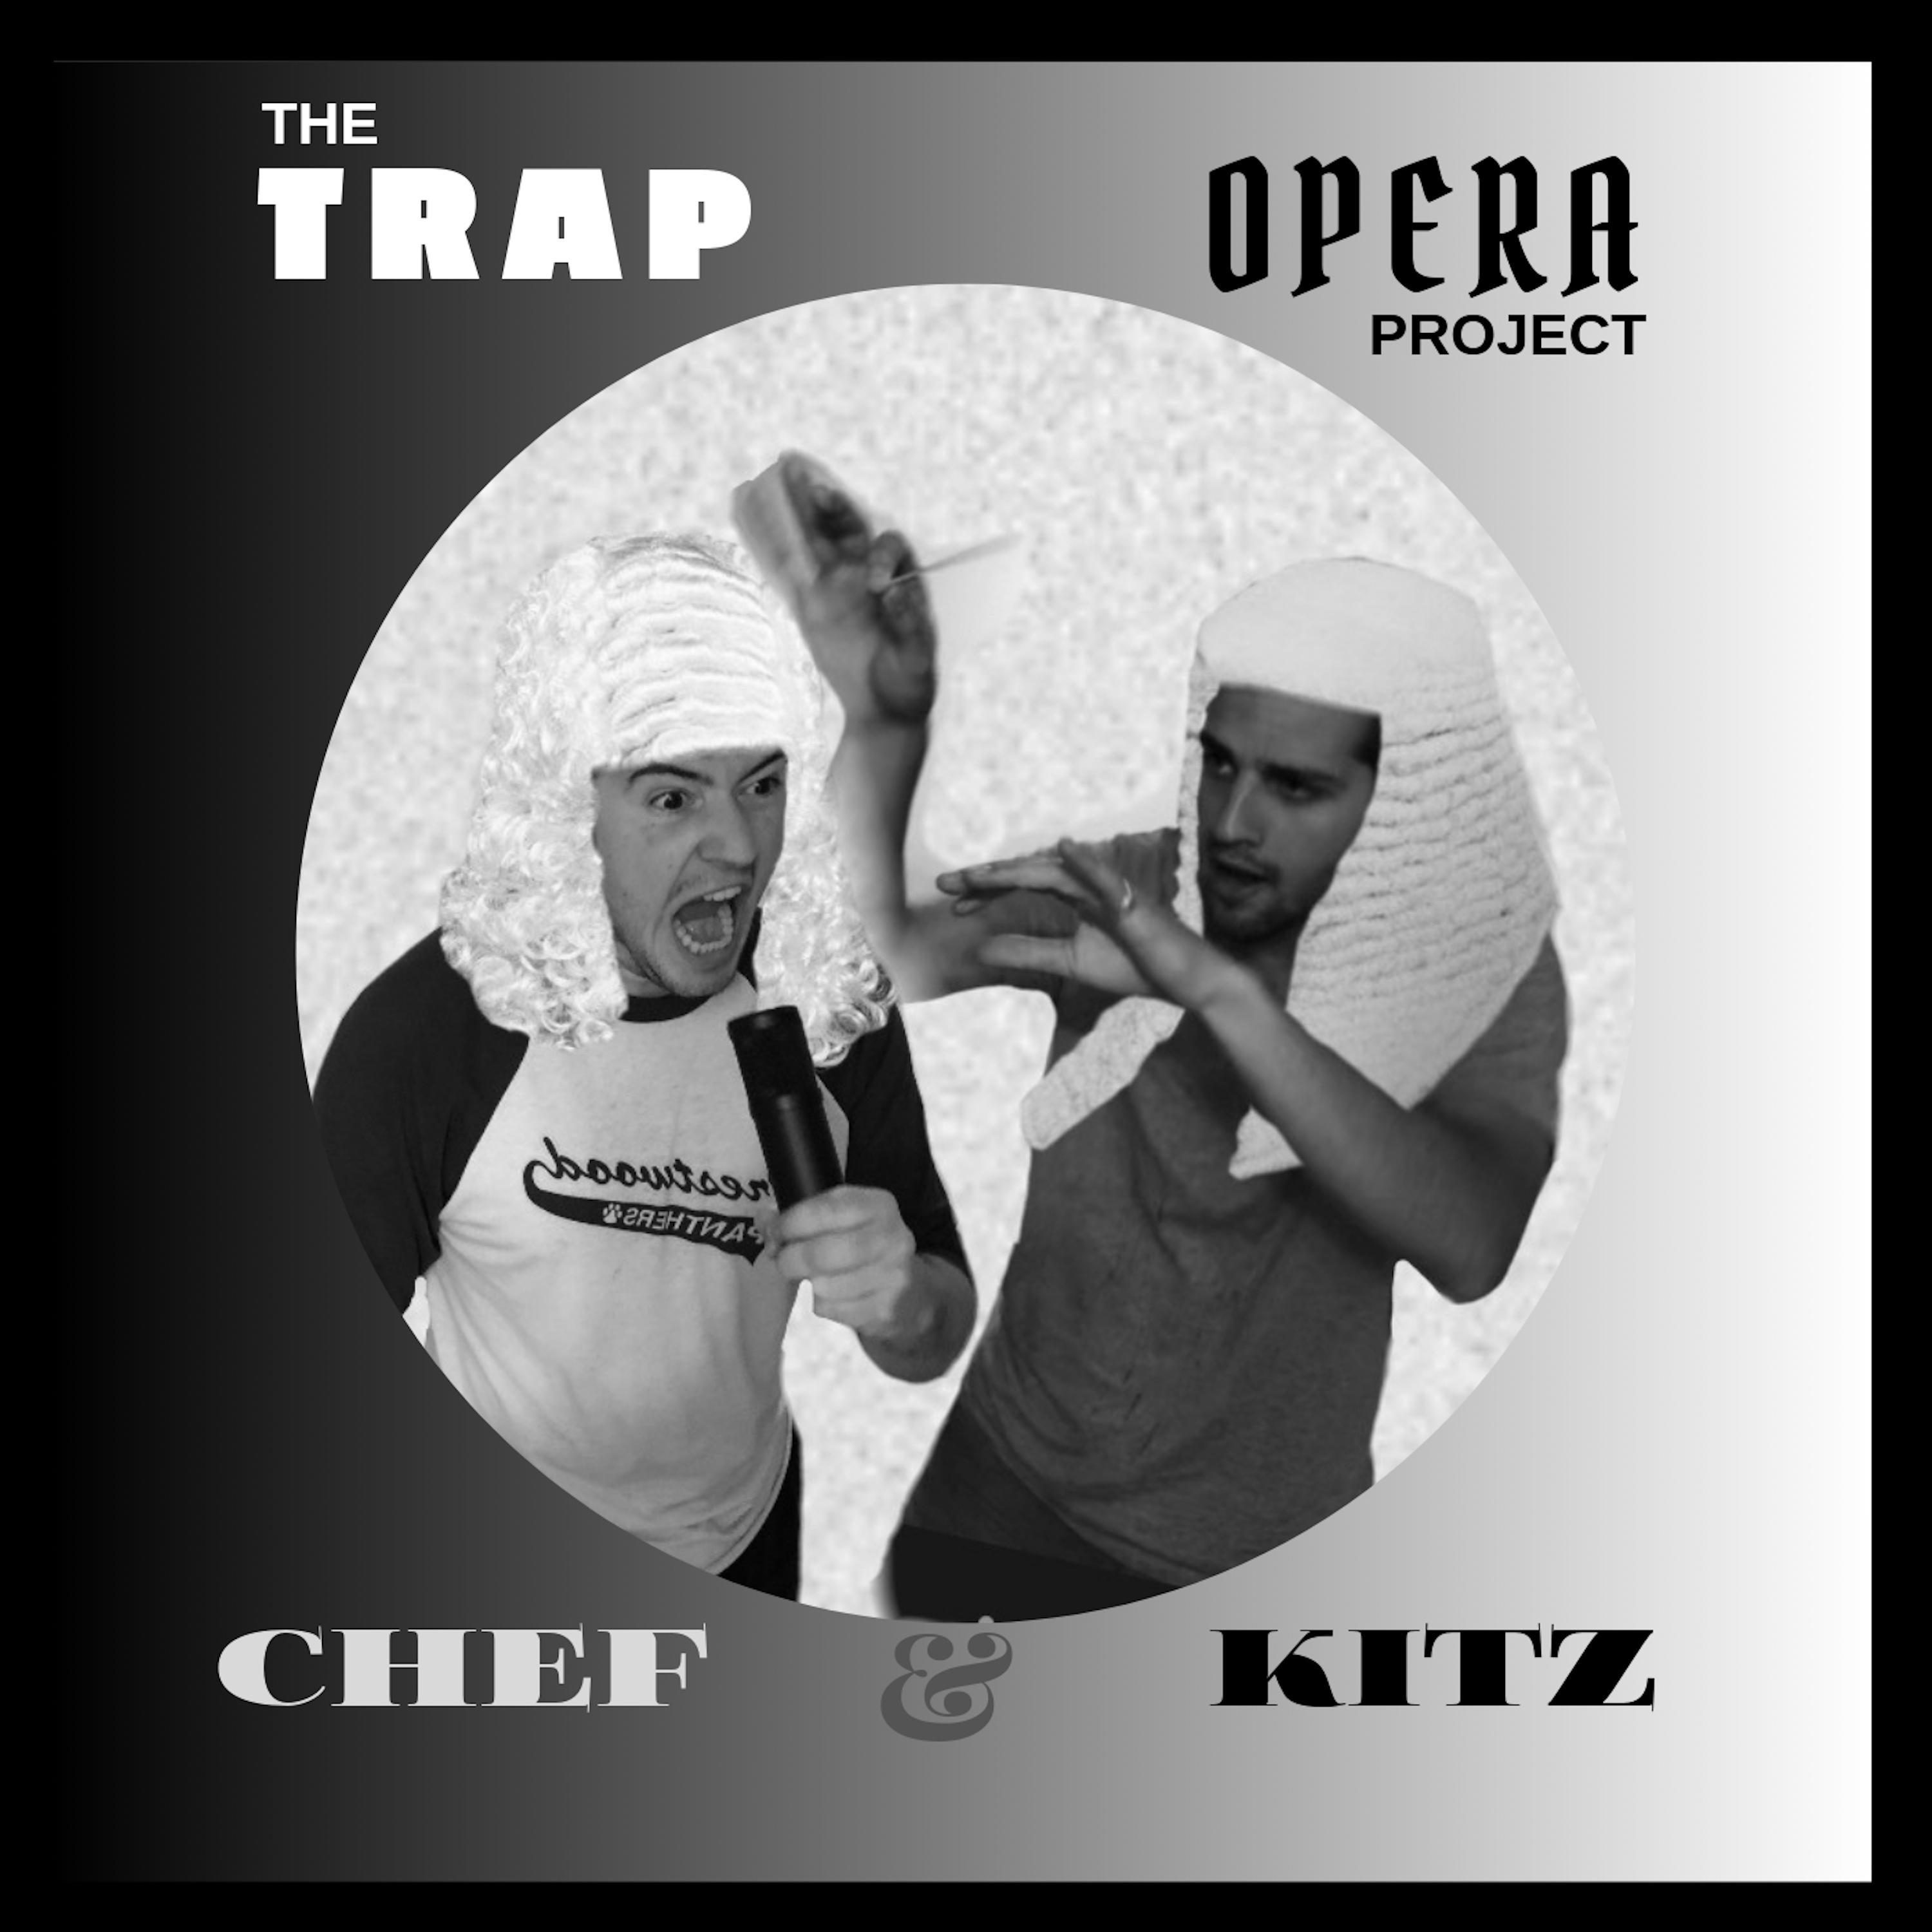 The Trap Opera Project